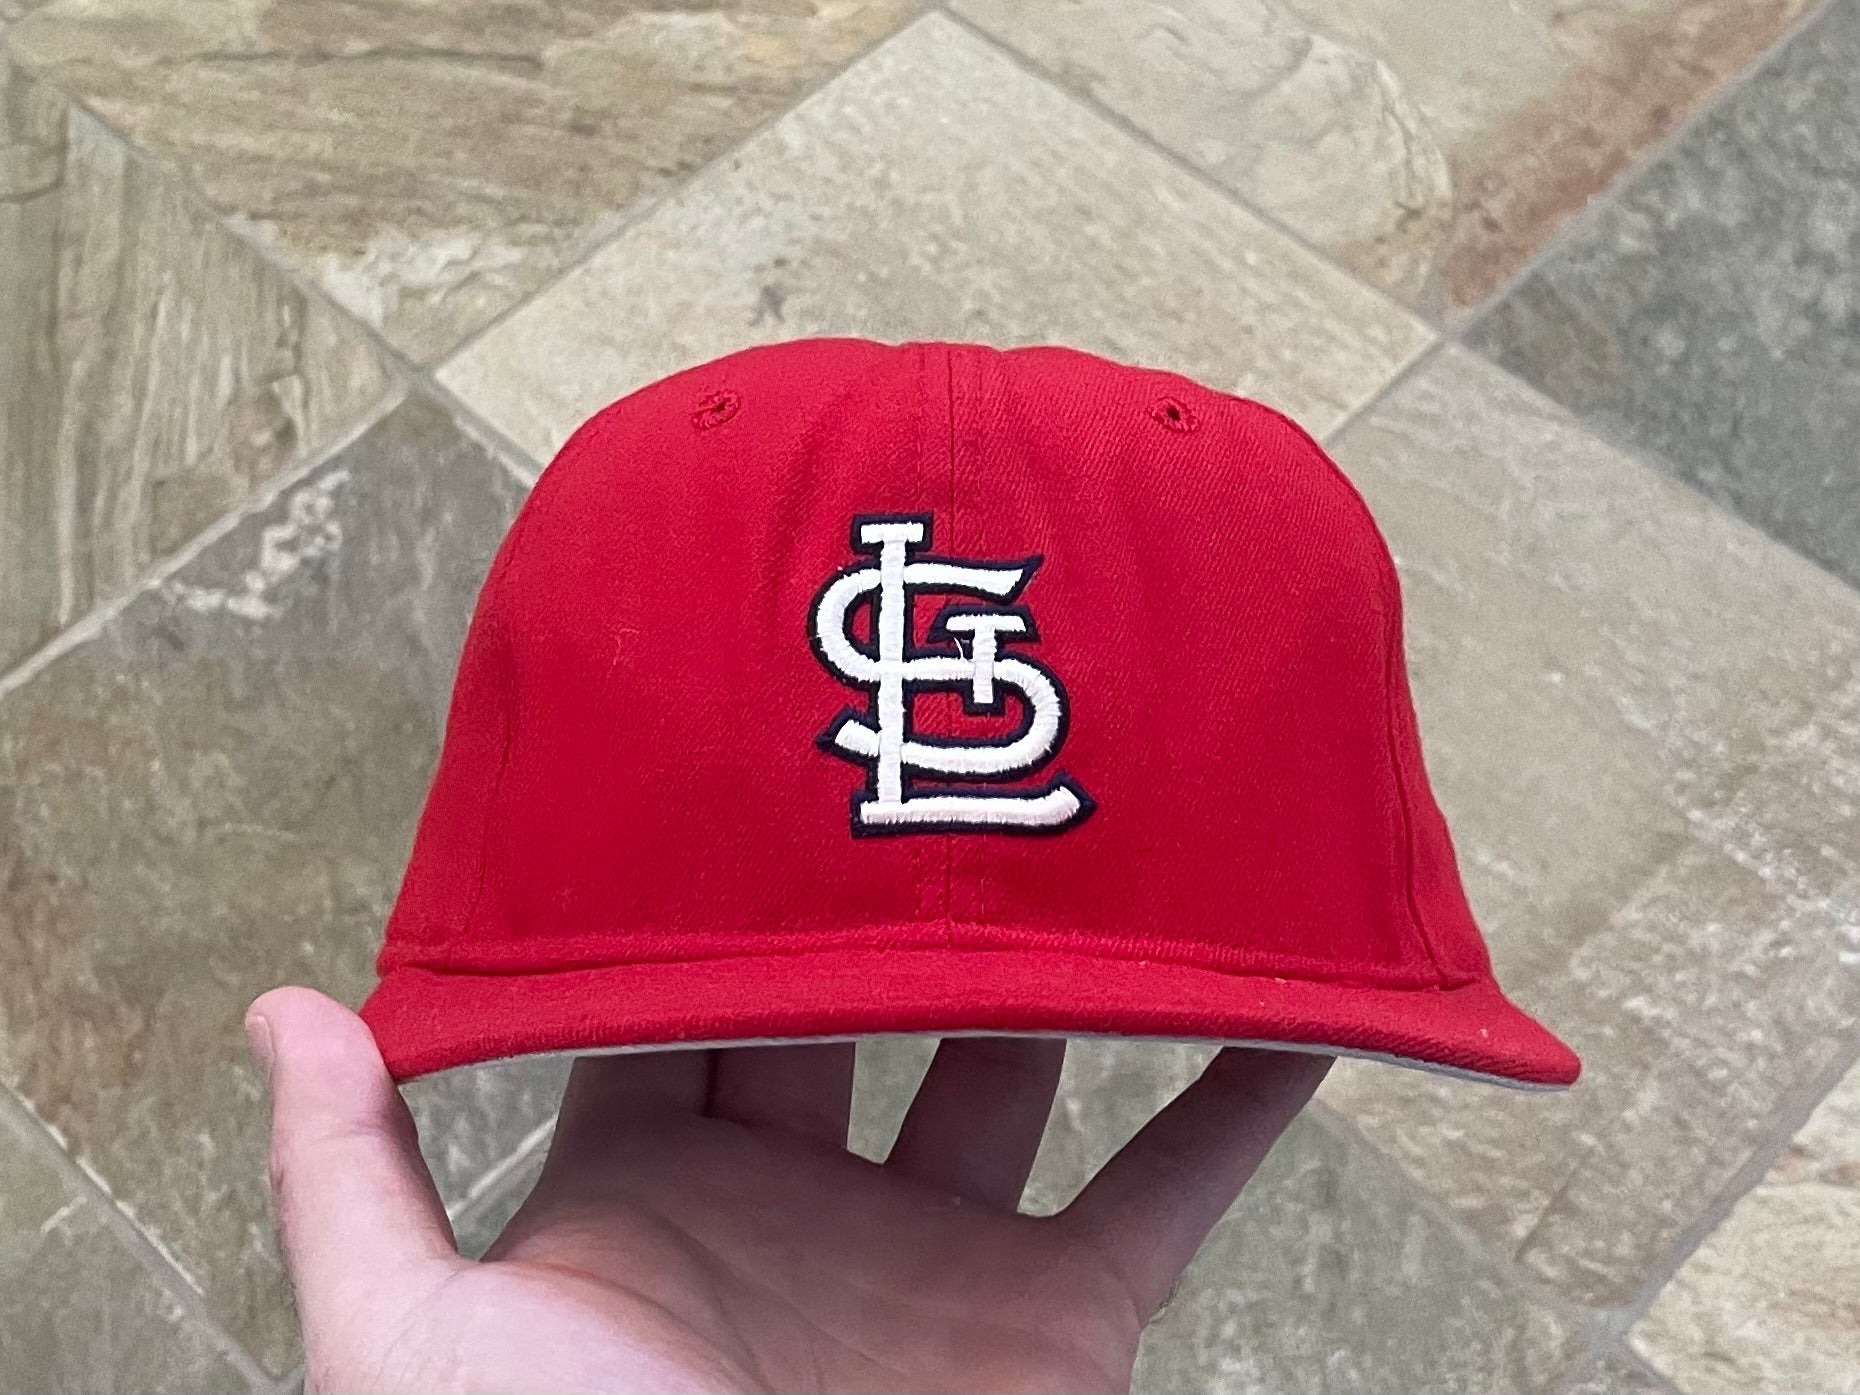 Vintage St Louis Cardinals Baseball Cap